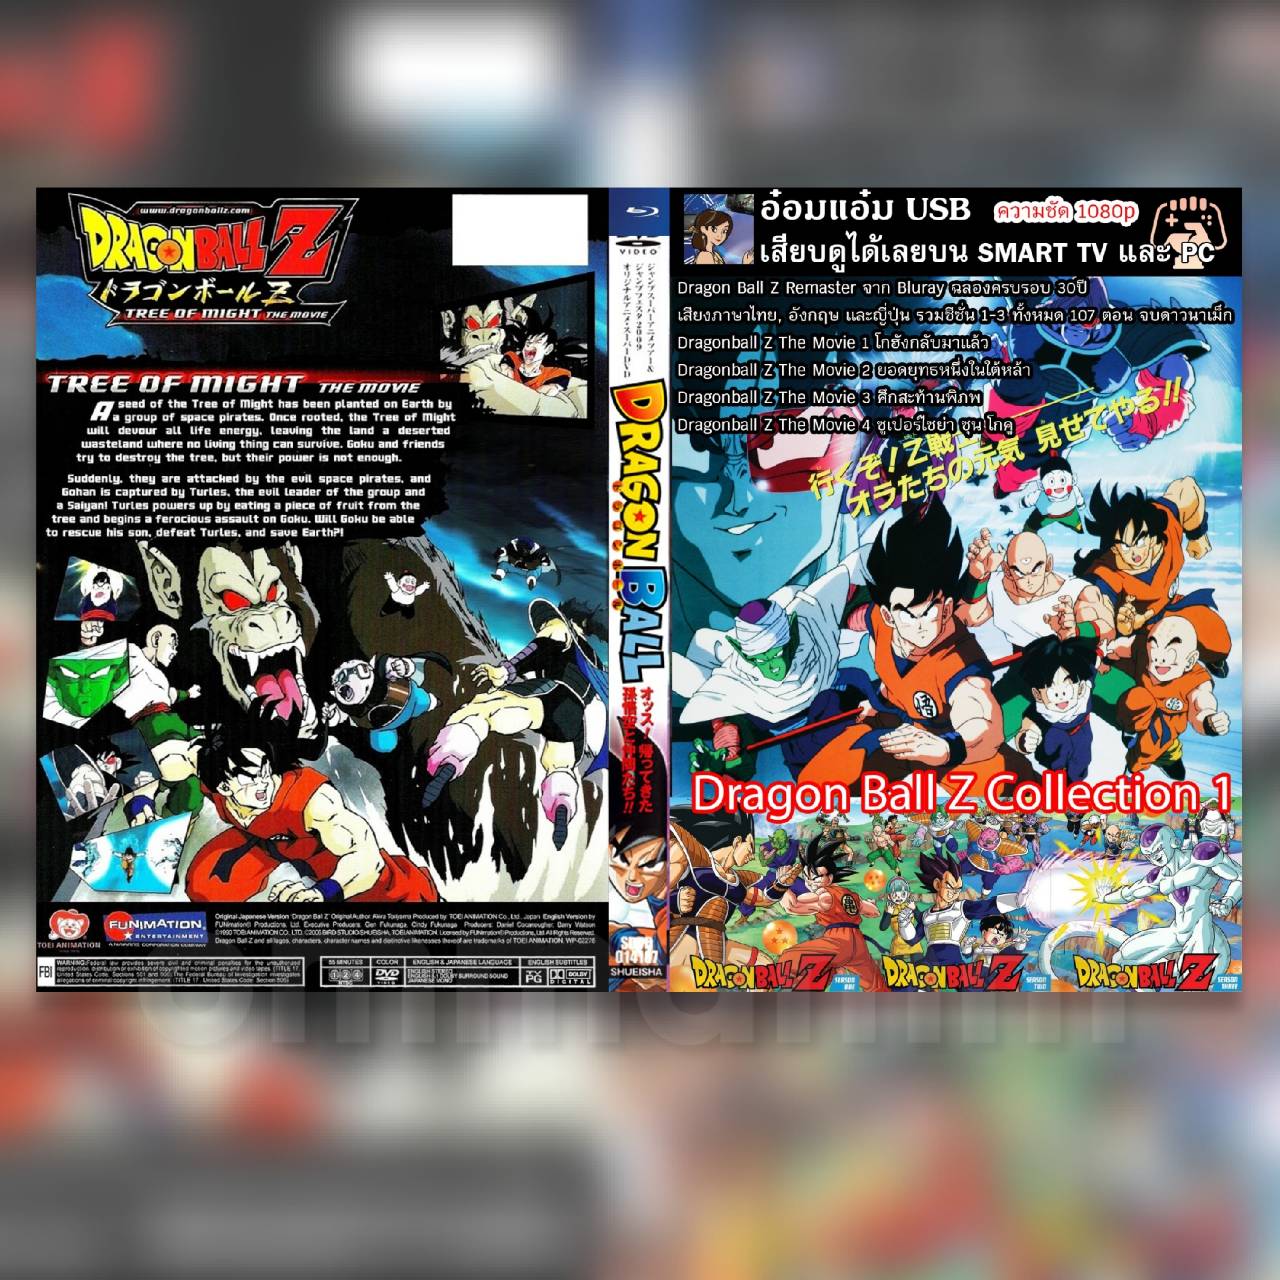 [USB Series] Dragon Ball Z Collection 1 - Dragon Ball Z TV Series Remaster จาก Bluray ฉลองครบรอบ 30 ปี เสียงพากย์ภาษาไทย, อังกฤษ และญี่ปุ่น ปรับเองได้ รวมซีซั่น 1-3 ทั้งหมด